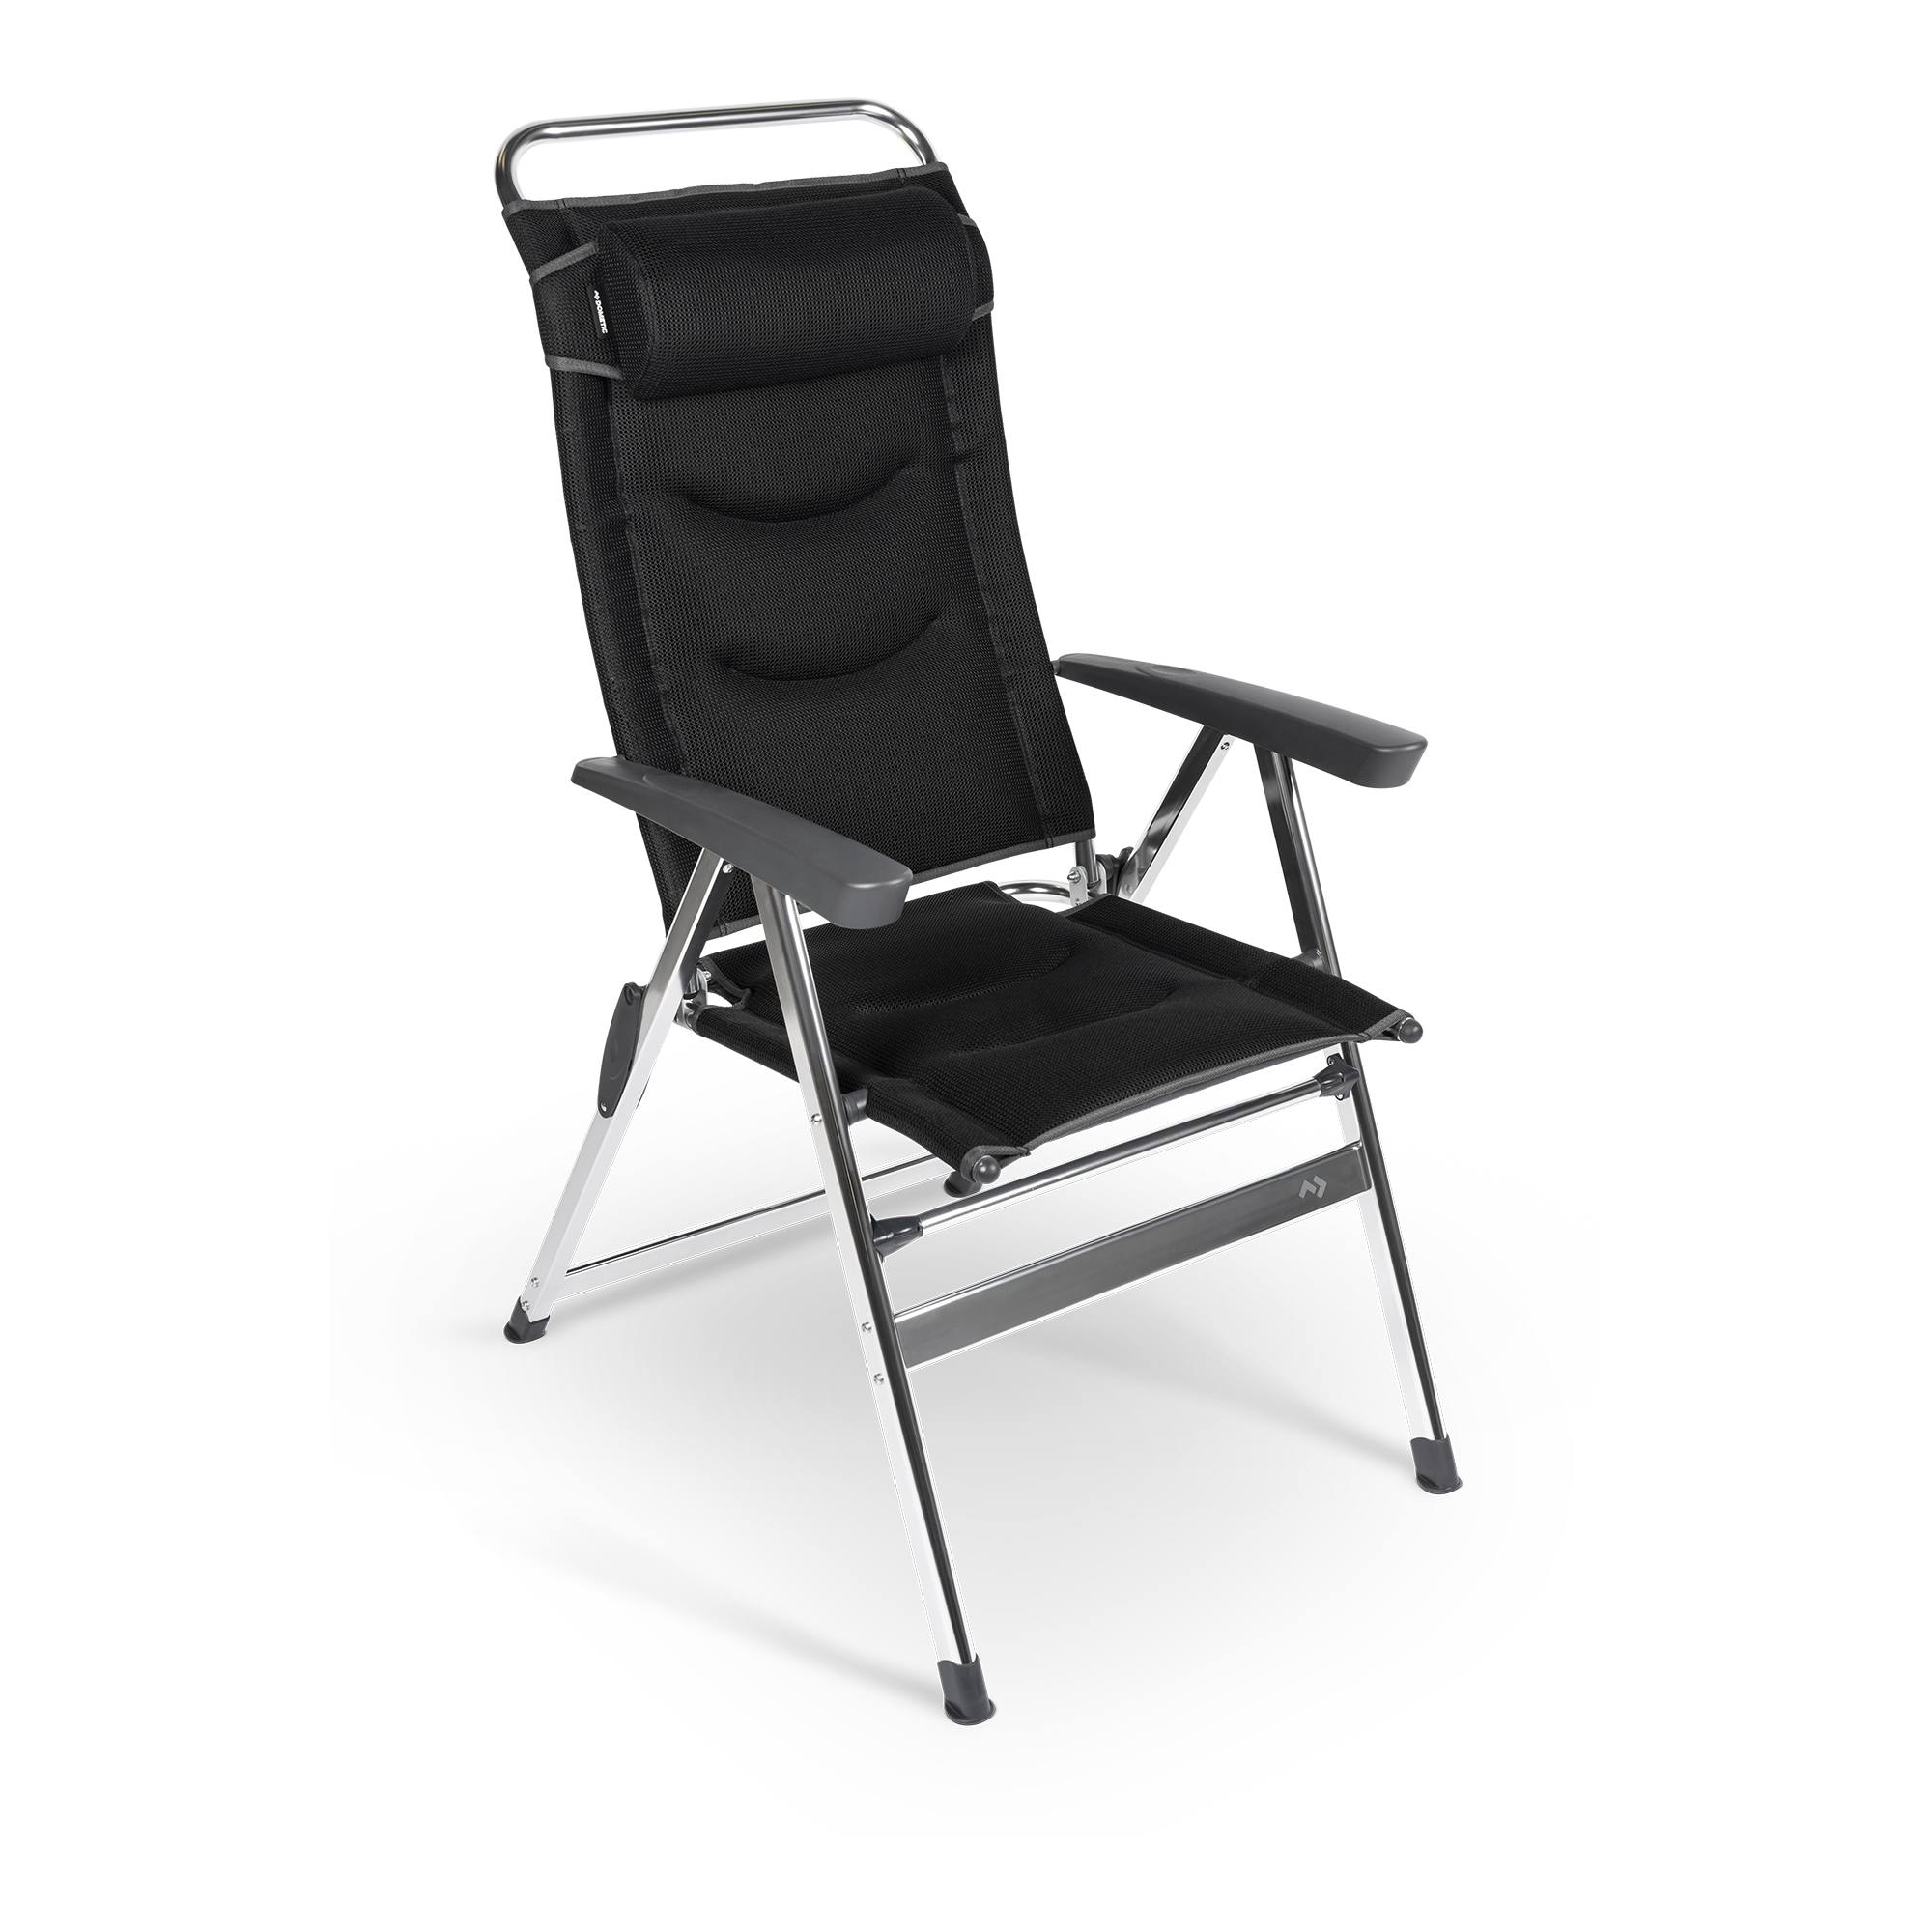 Dometic Quattro Milano Chair Pro Black Klappstuhl pro black,schwarz